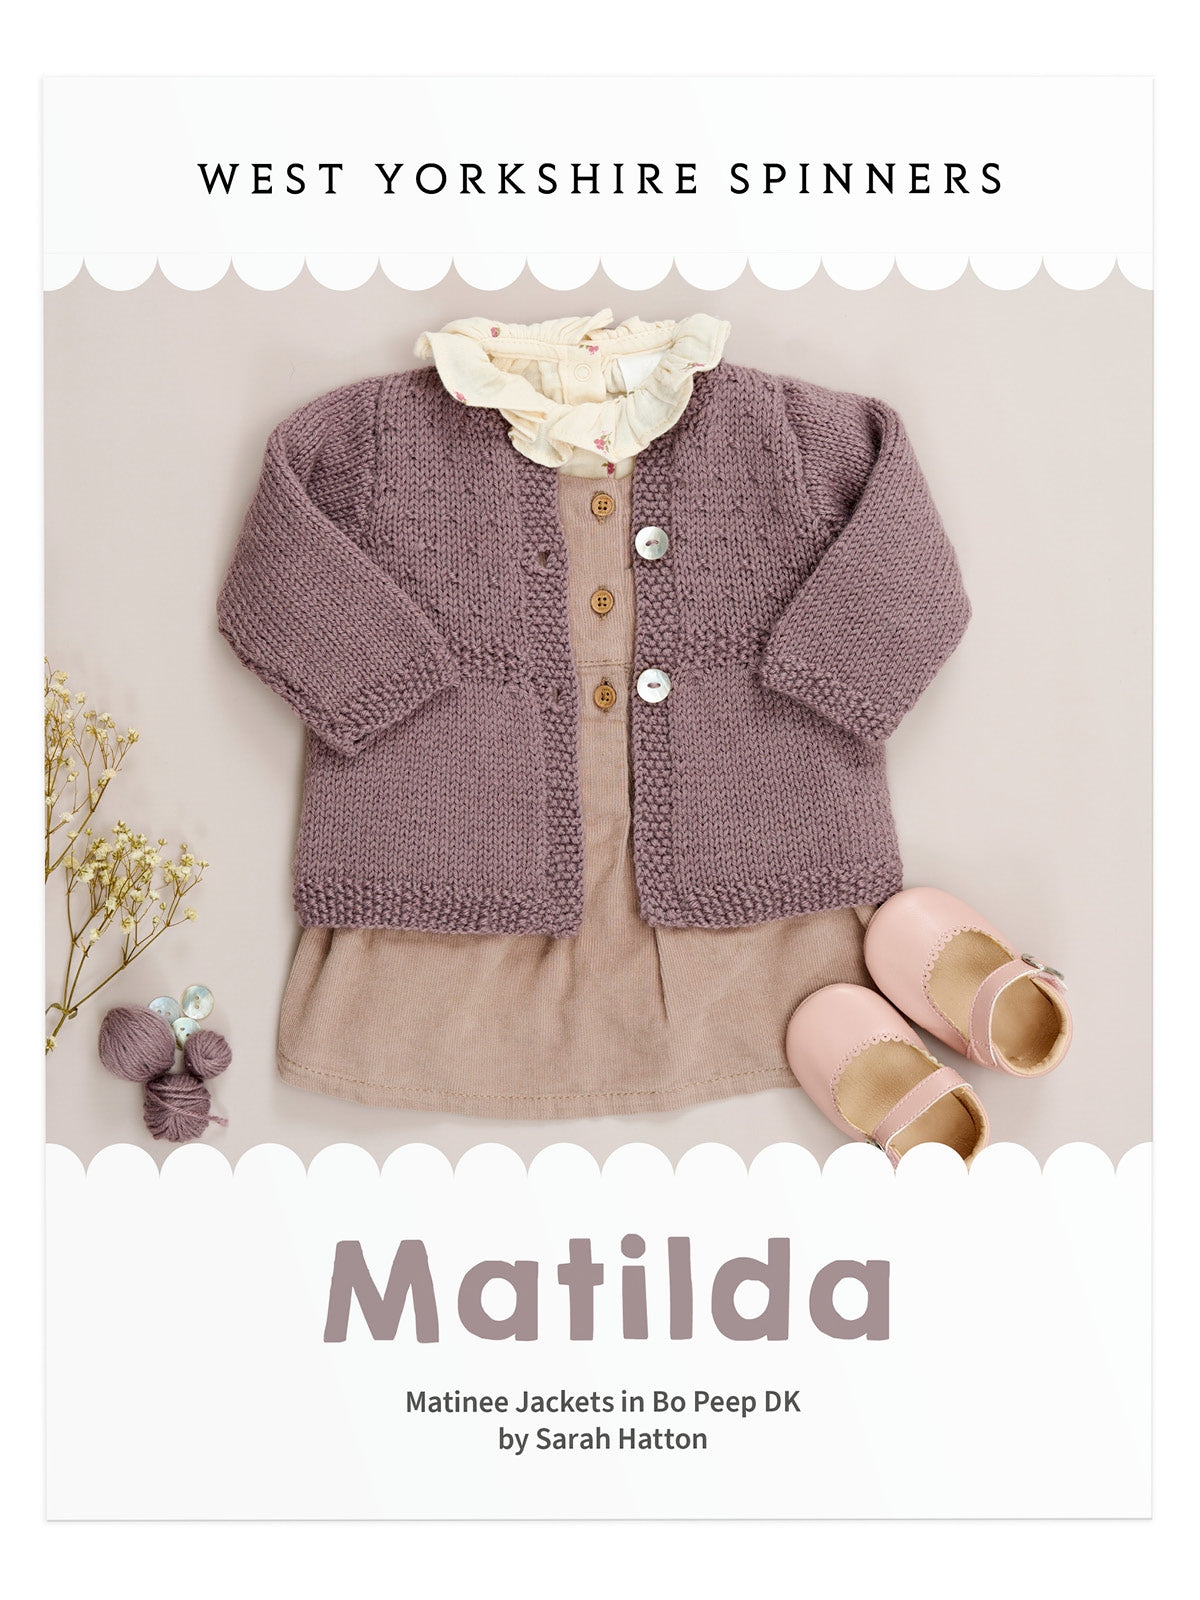 WYS Matilda: Matinee Jackets in Bo Peep DK by Sarah Hatton